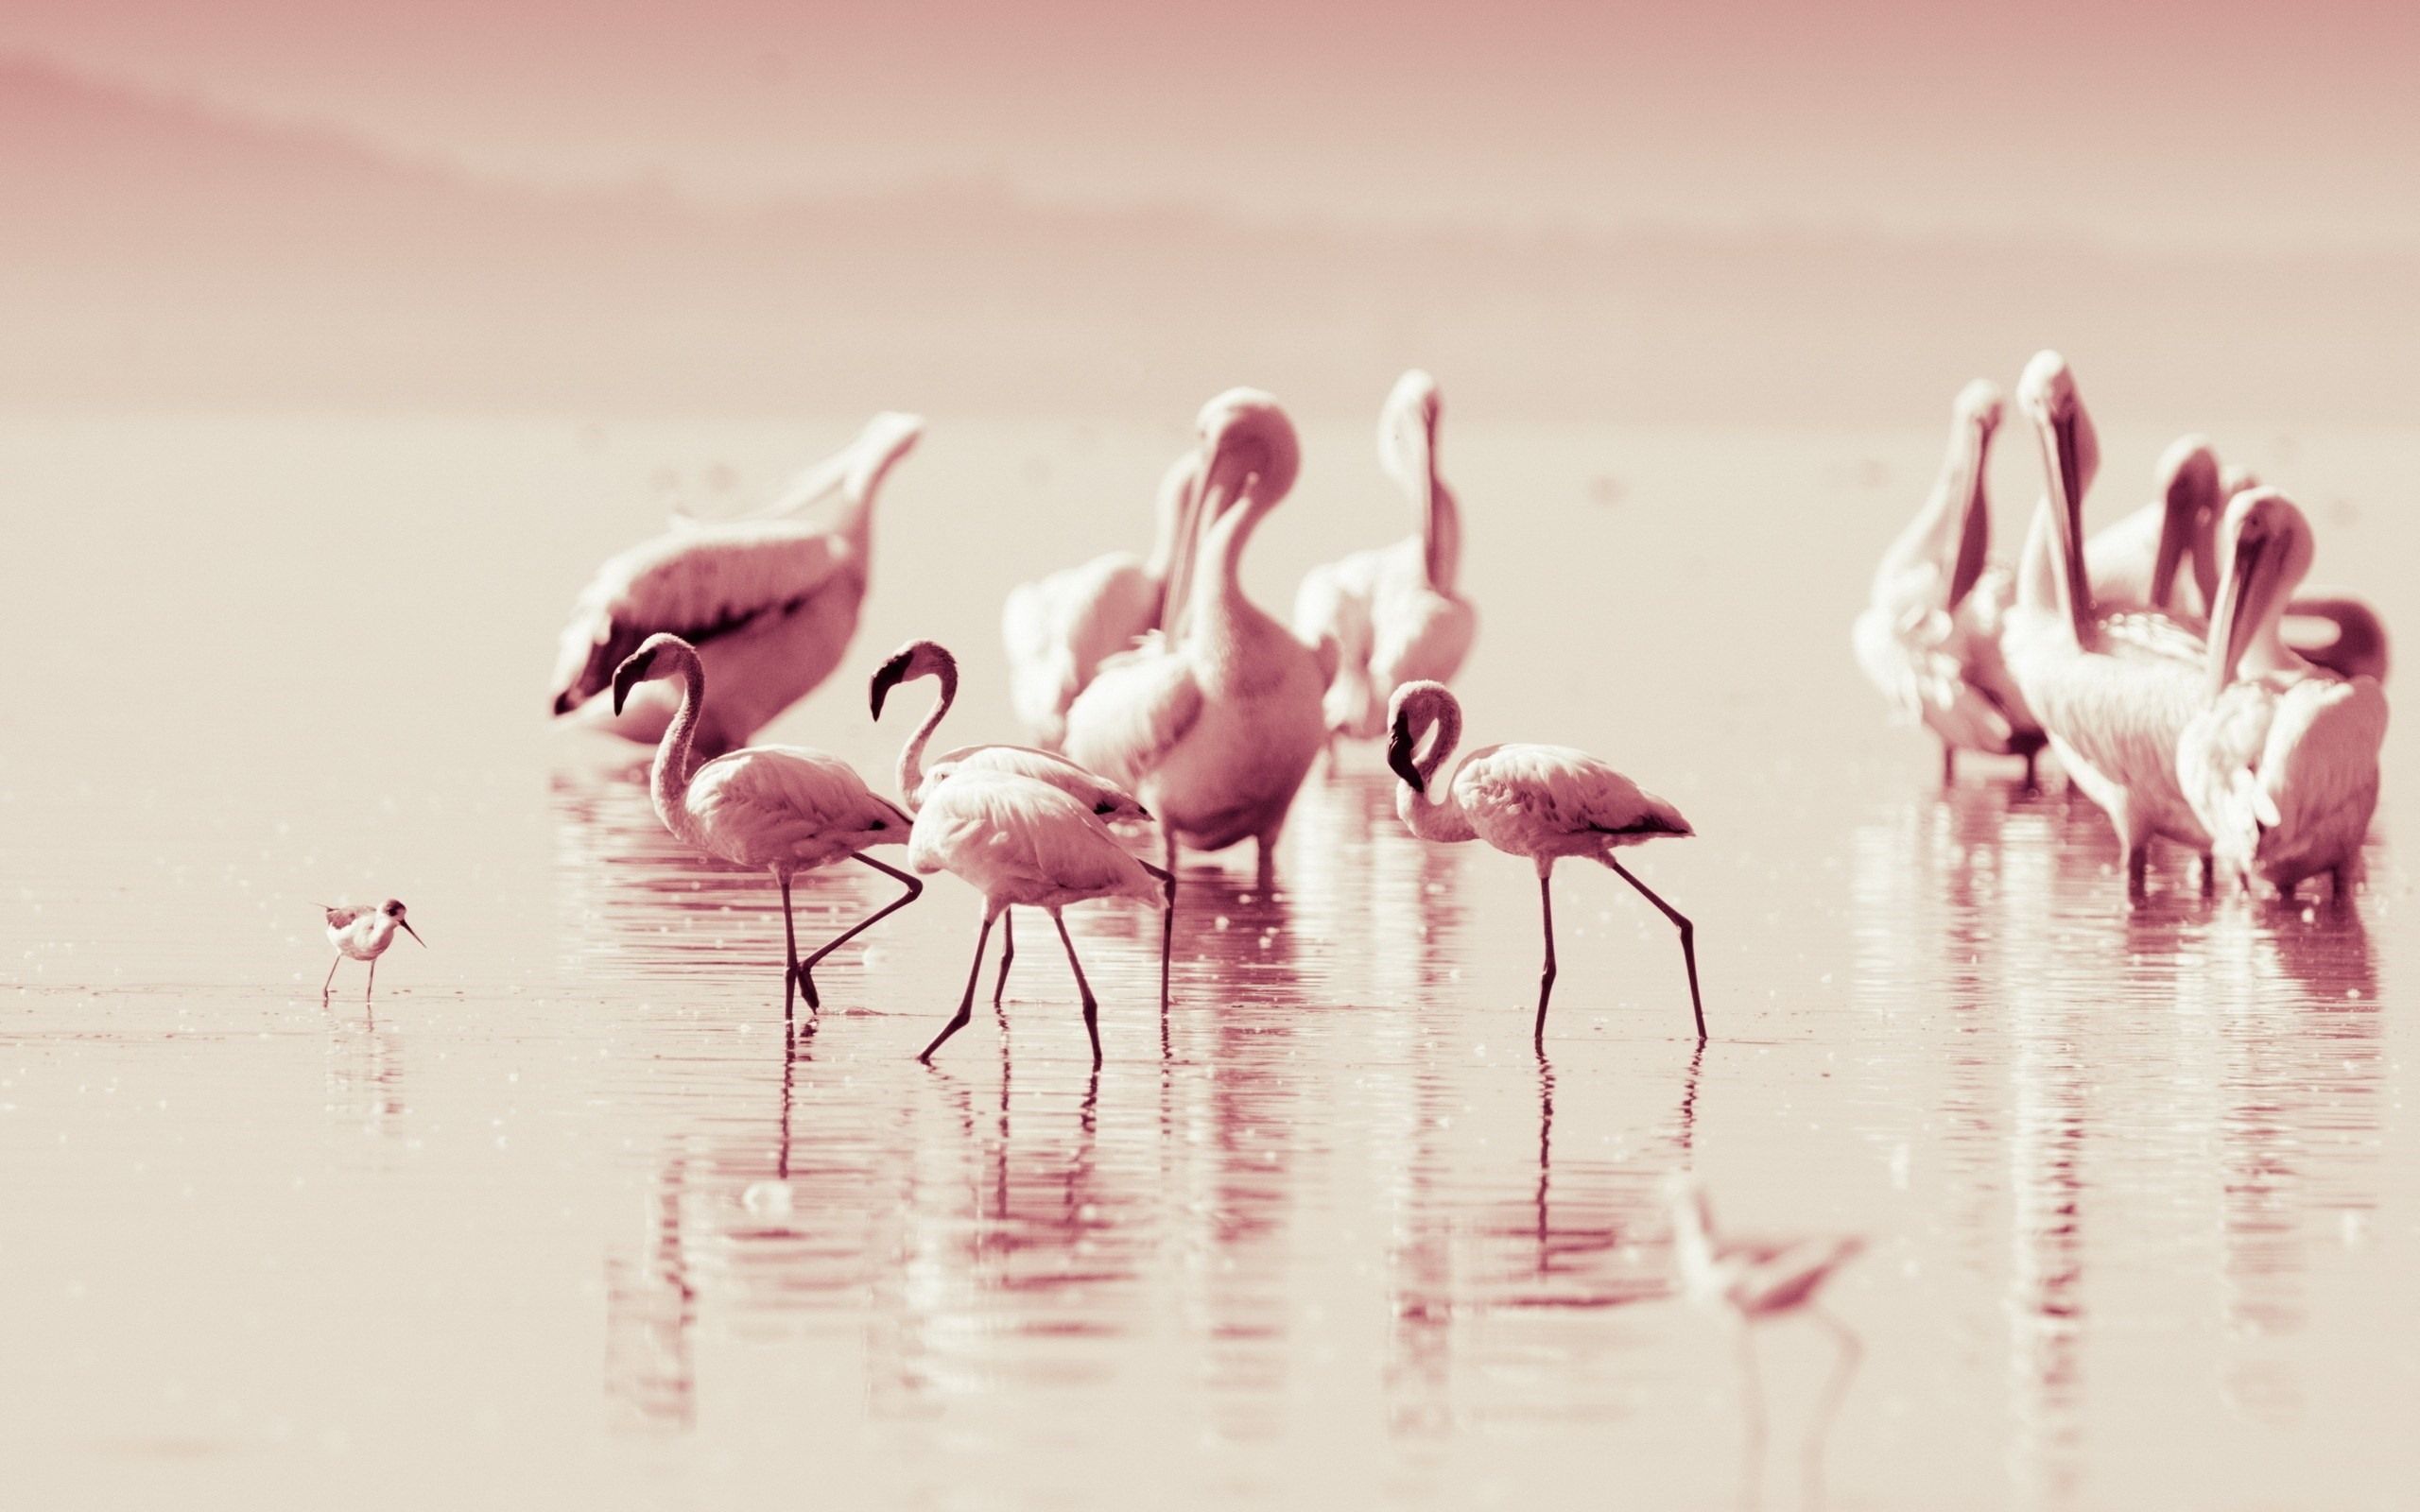  Flamingo Hintergrundbild 2560x1600. Einige Flamingos, rosa Federvögel 2560x1600 HD Hintergrundbilder, HD, Bild